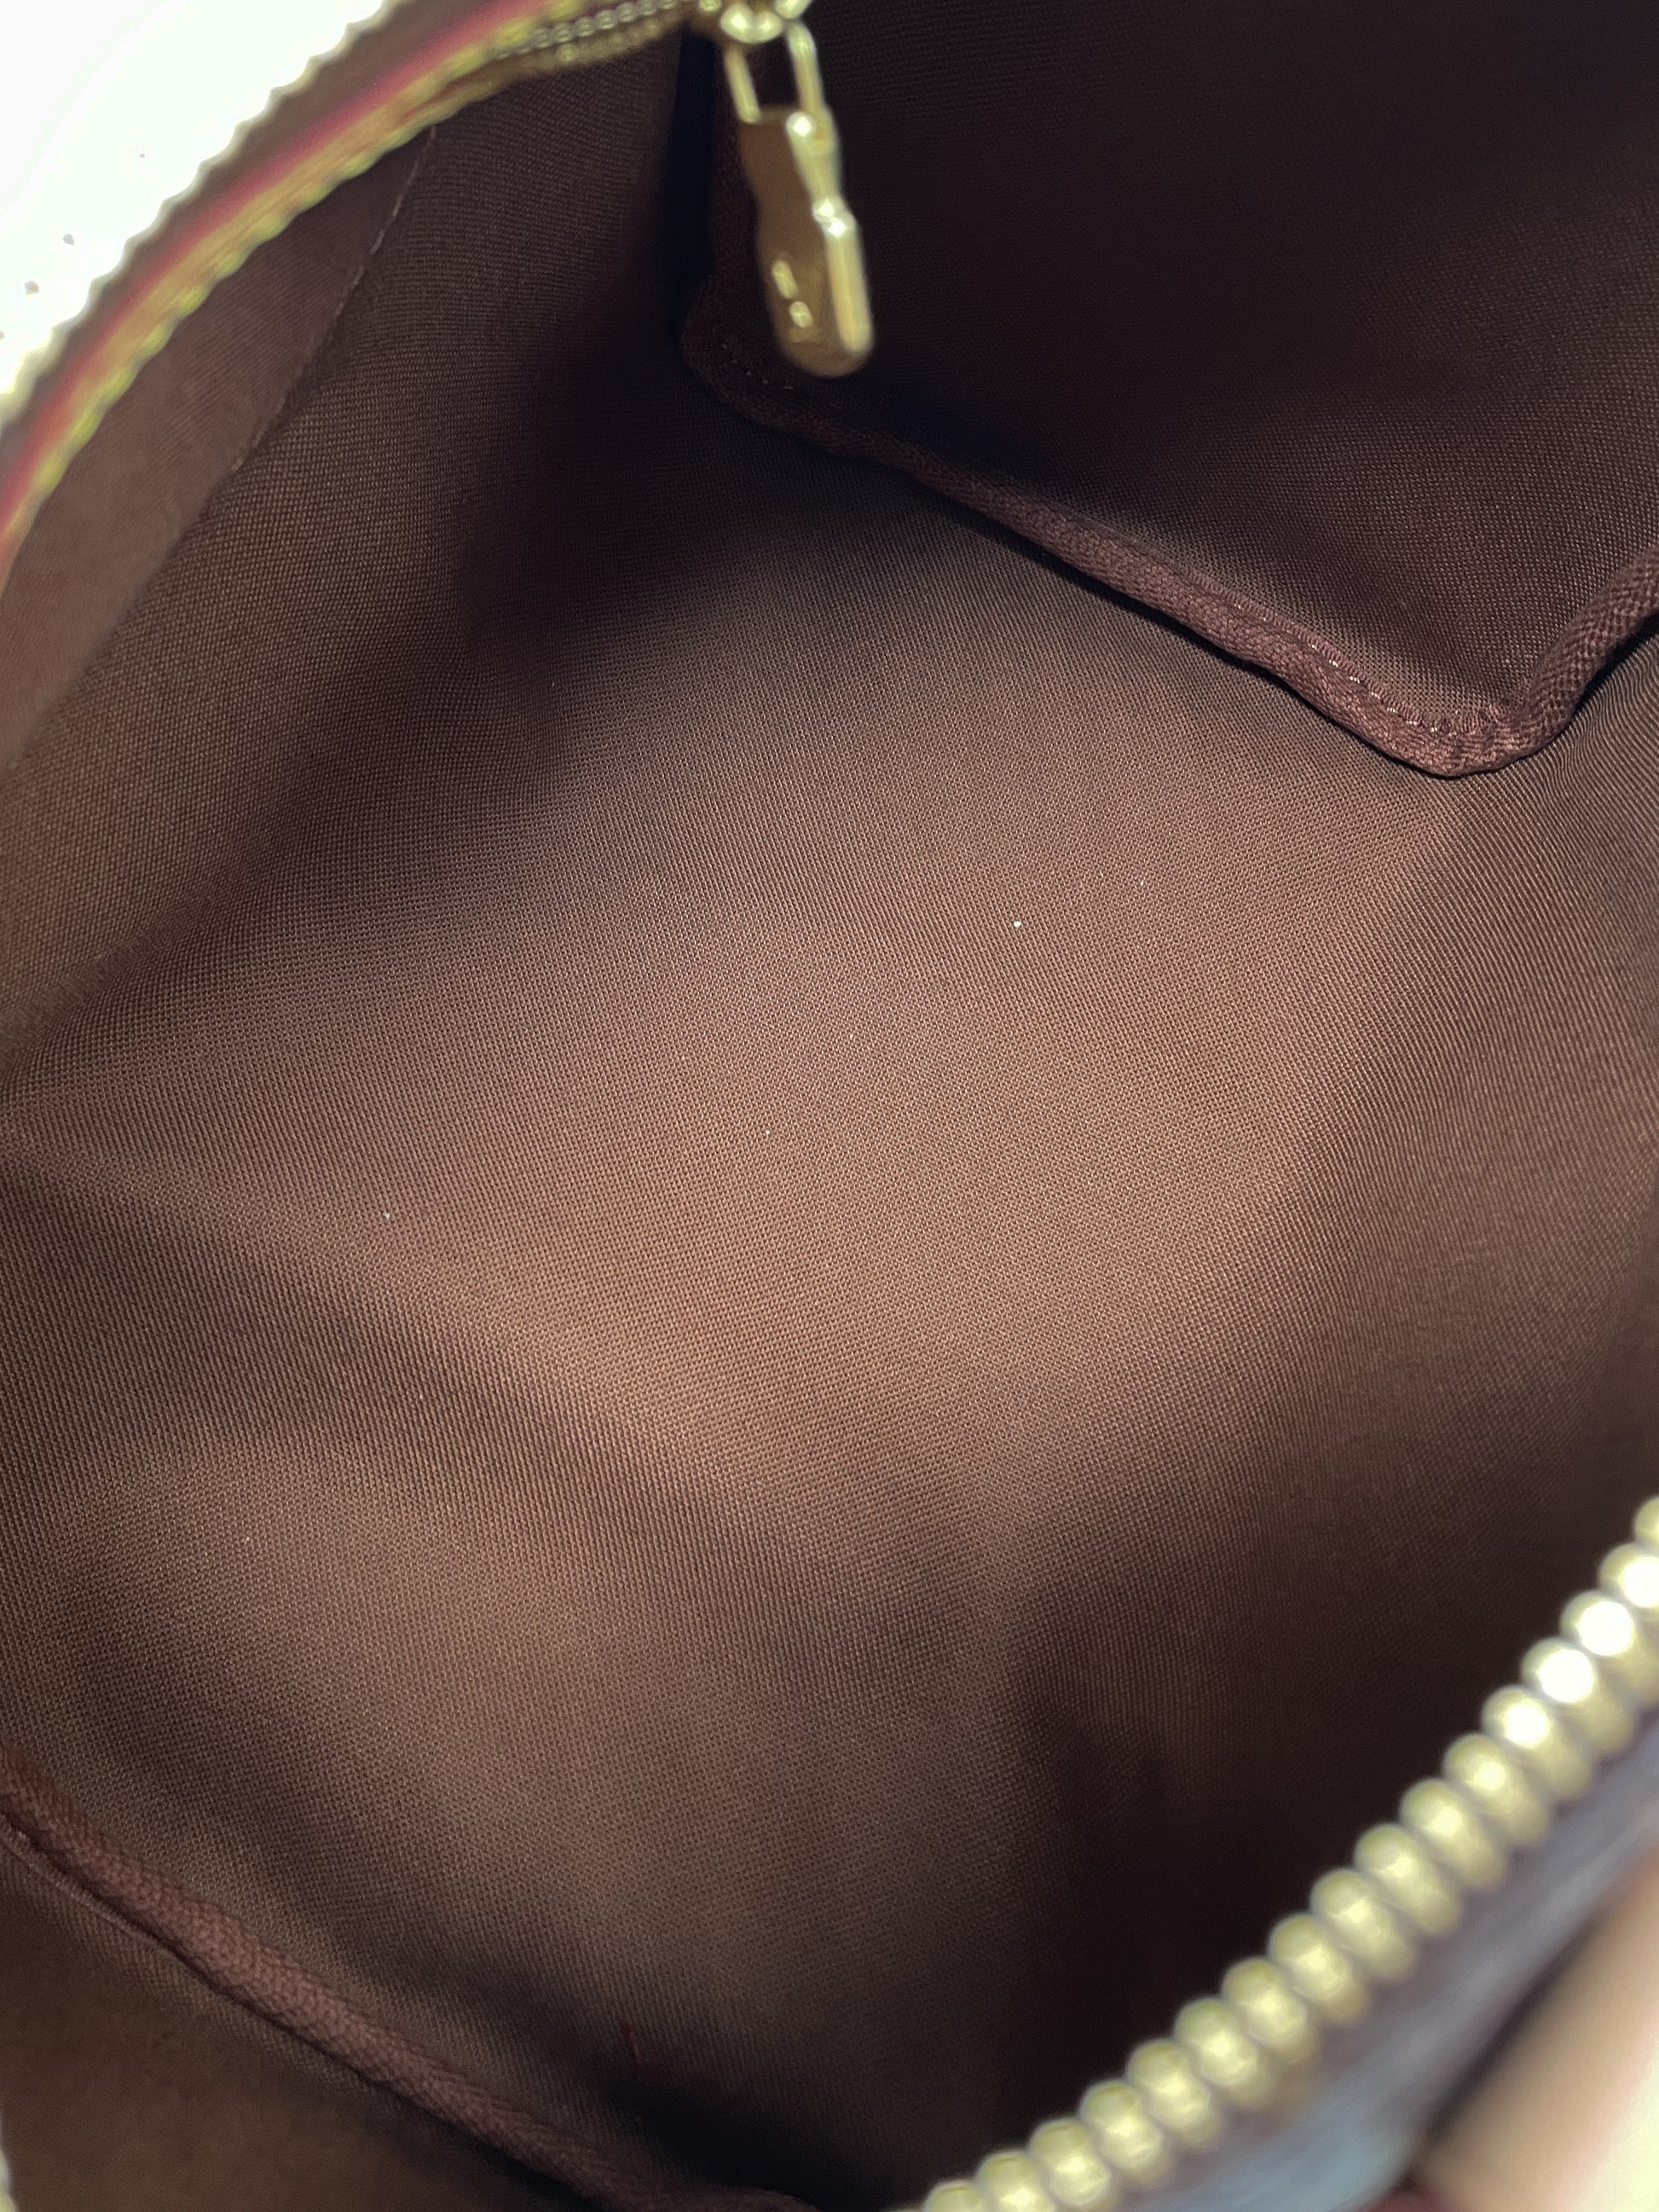 Authentication on bagaholic for Louis Vuitton bag.